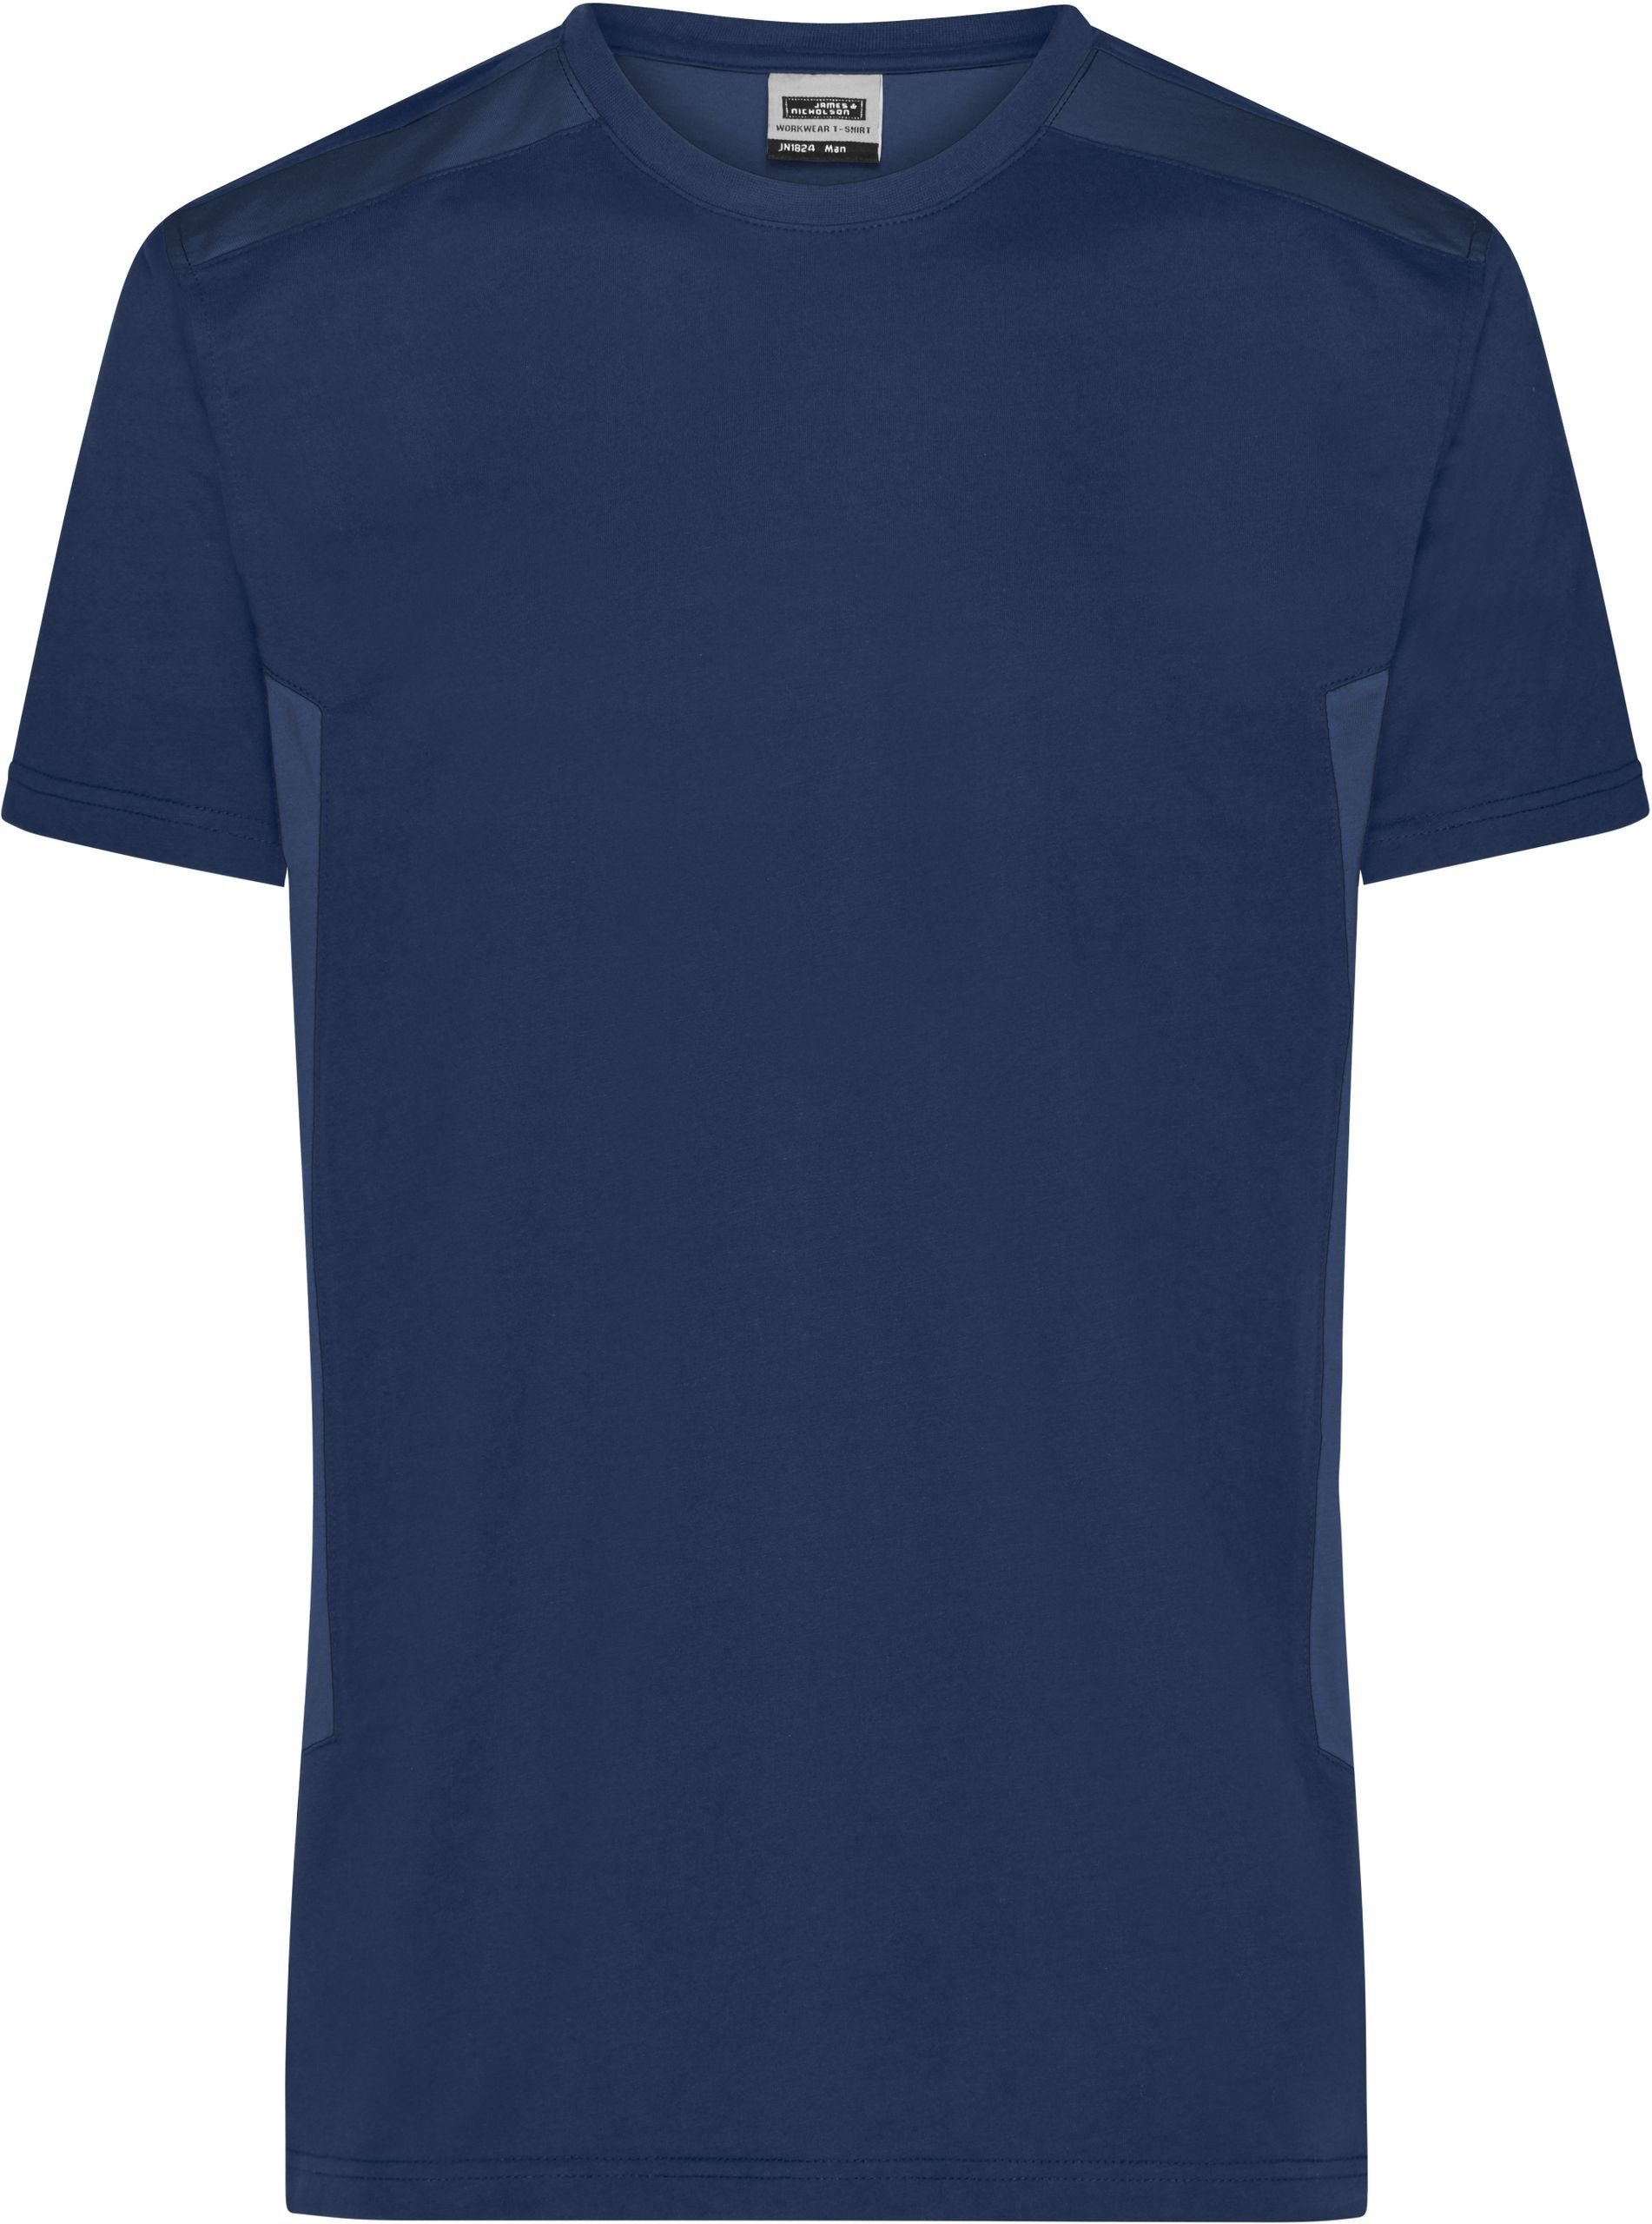 James & Nicholson T-Shirt Herren Workwear T-Shirt - Strong navy/navy